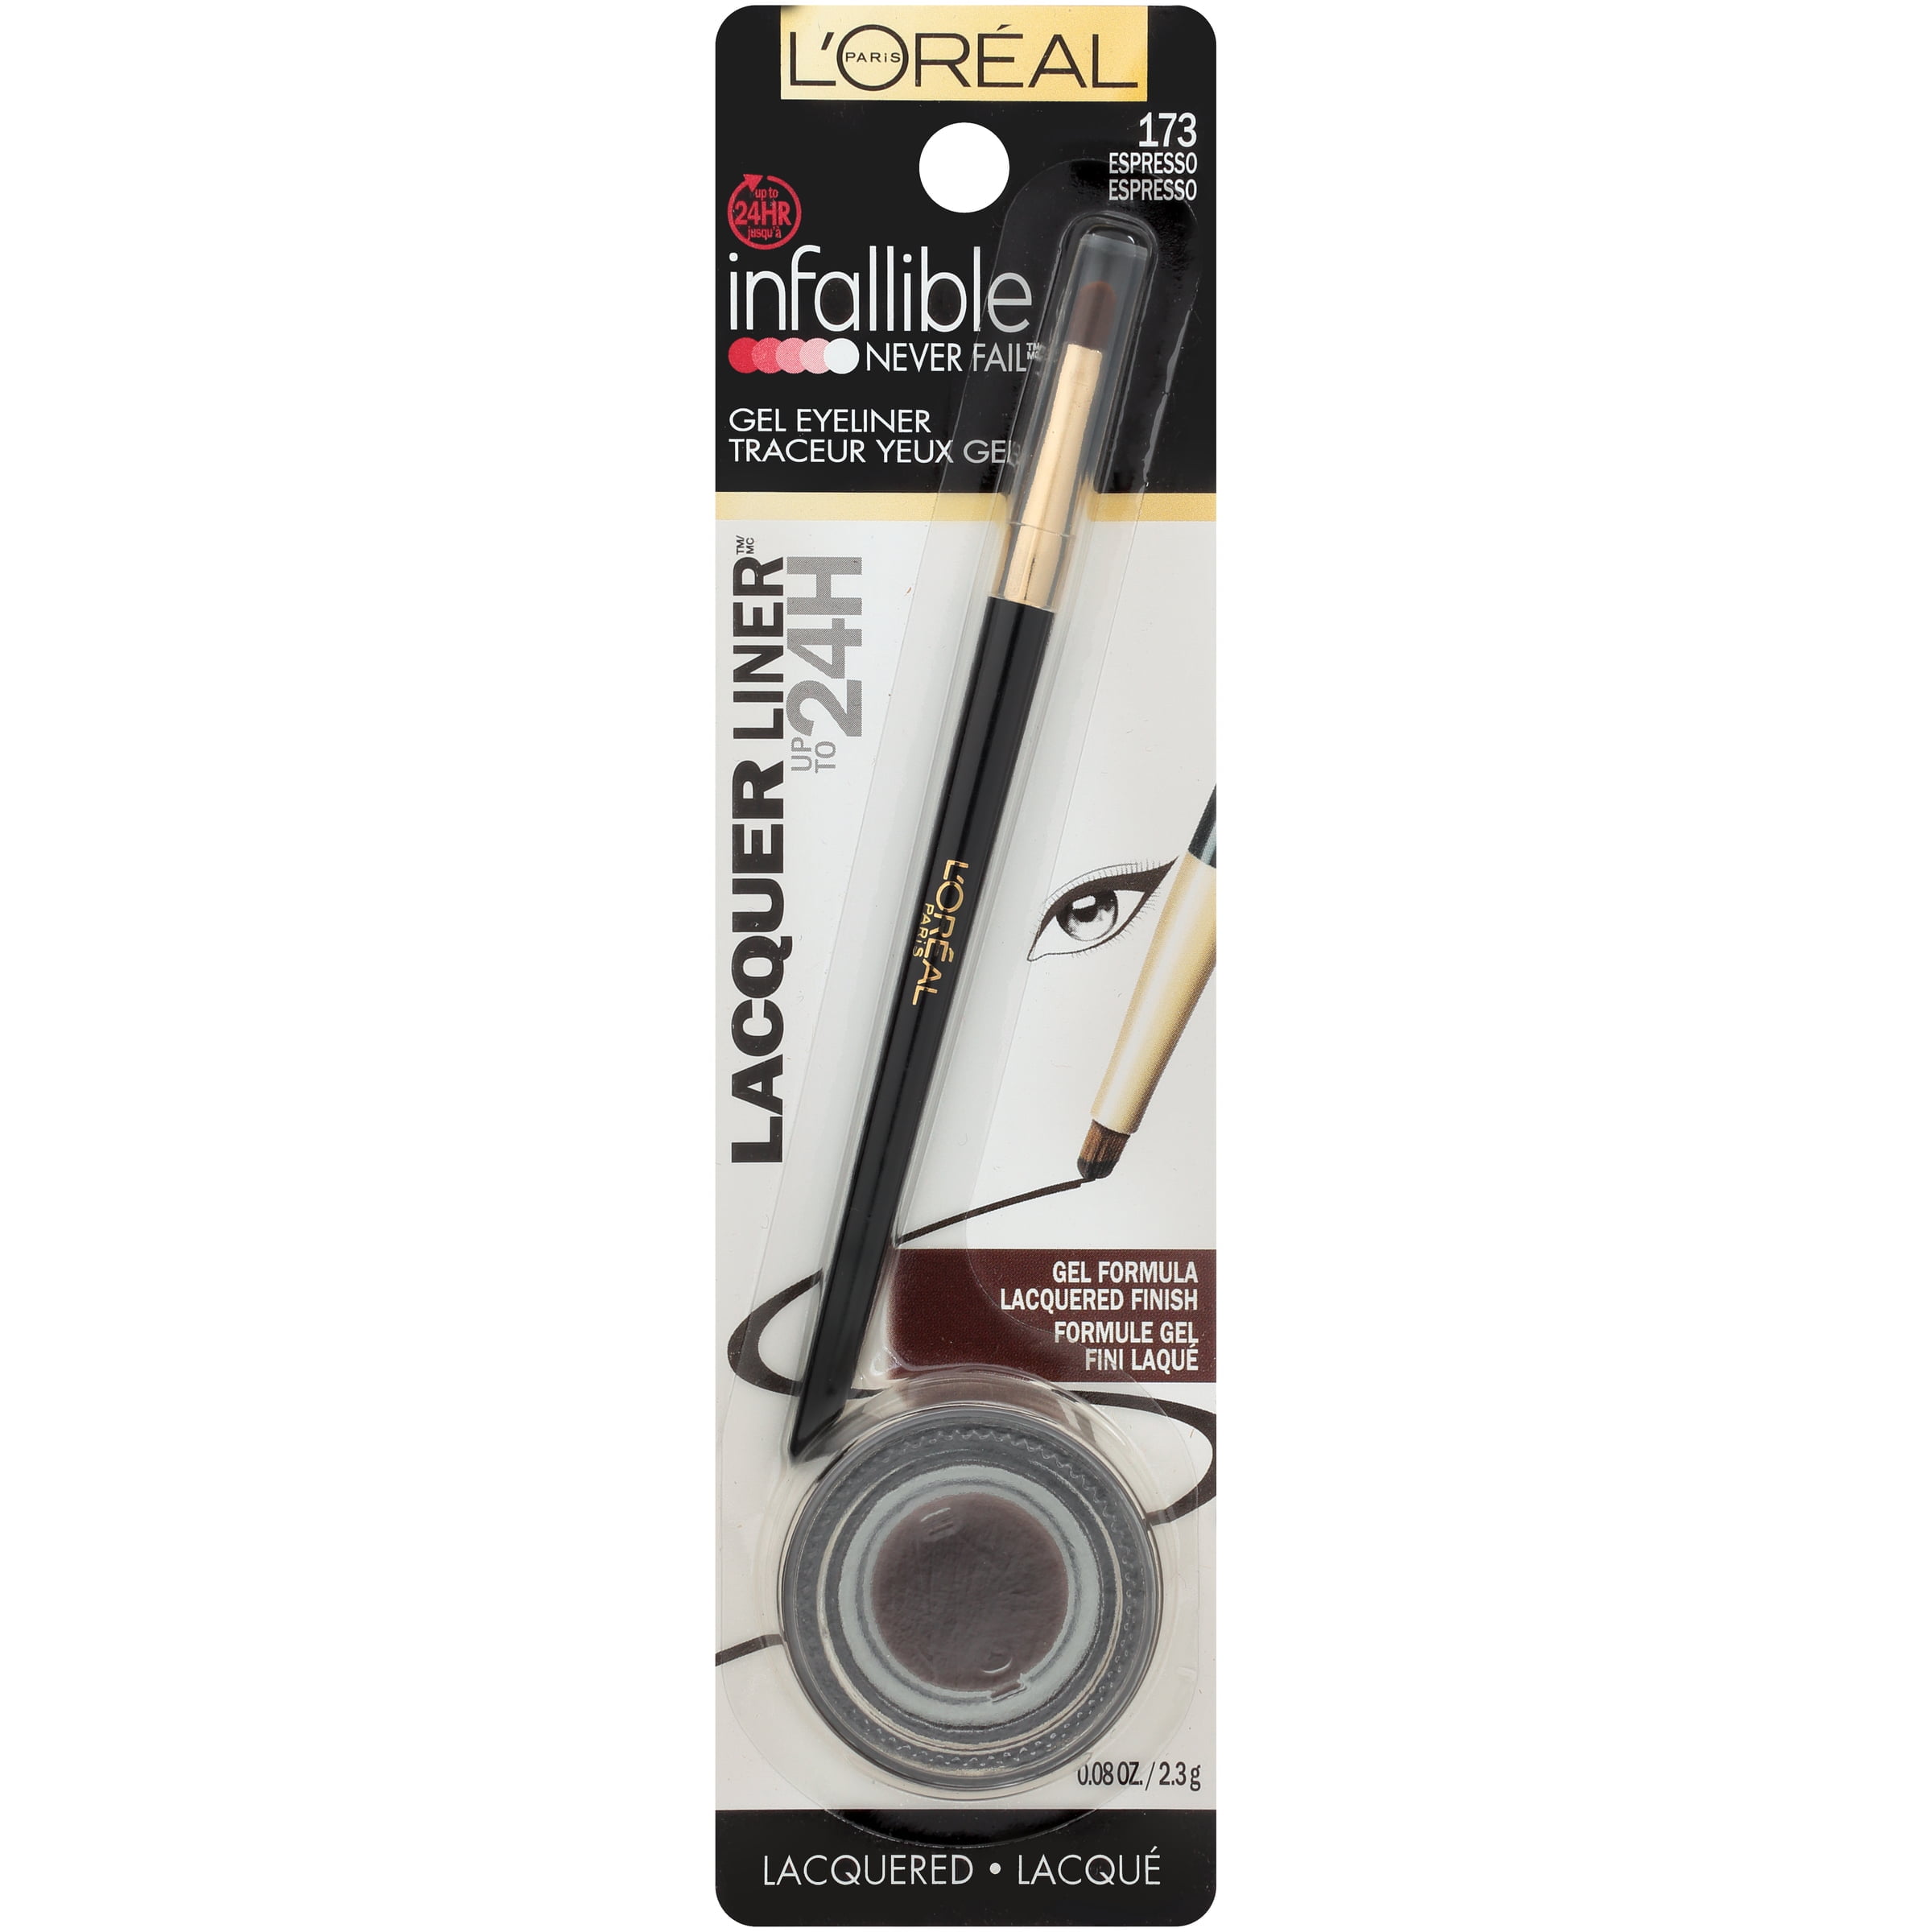 L'Oreal Paris Infallible Lacquer Eyeliner, Espresso Walmart.com